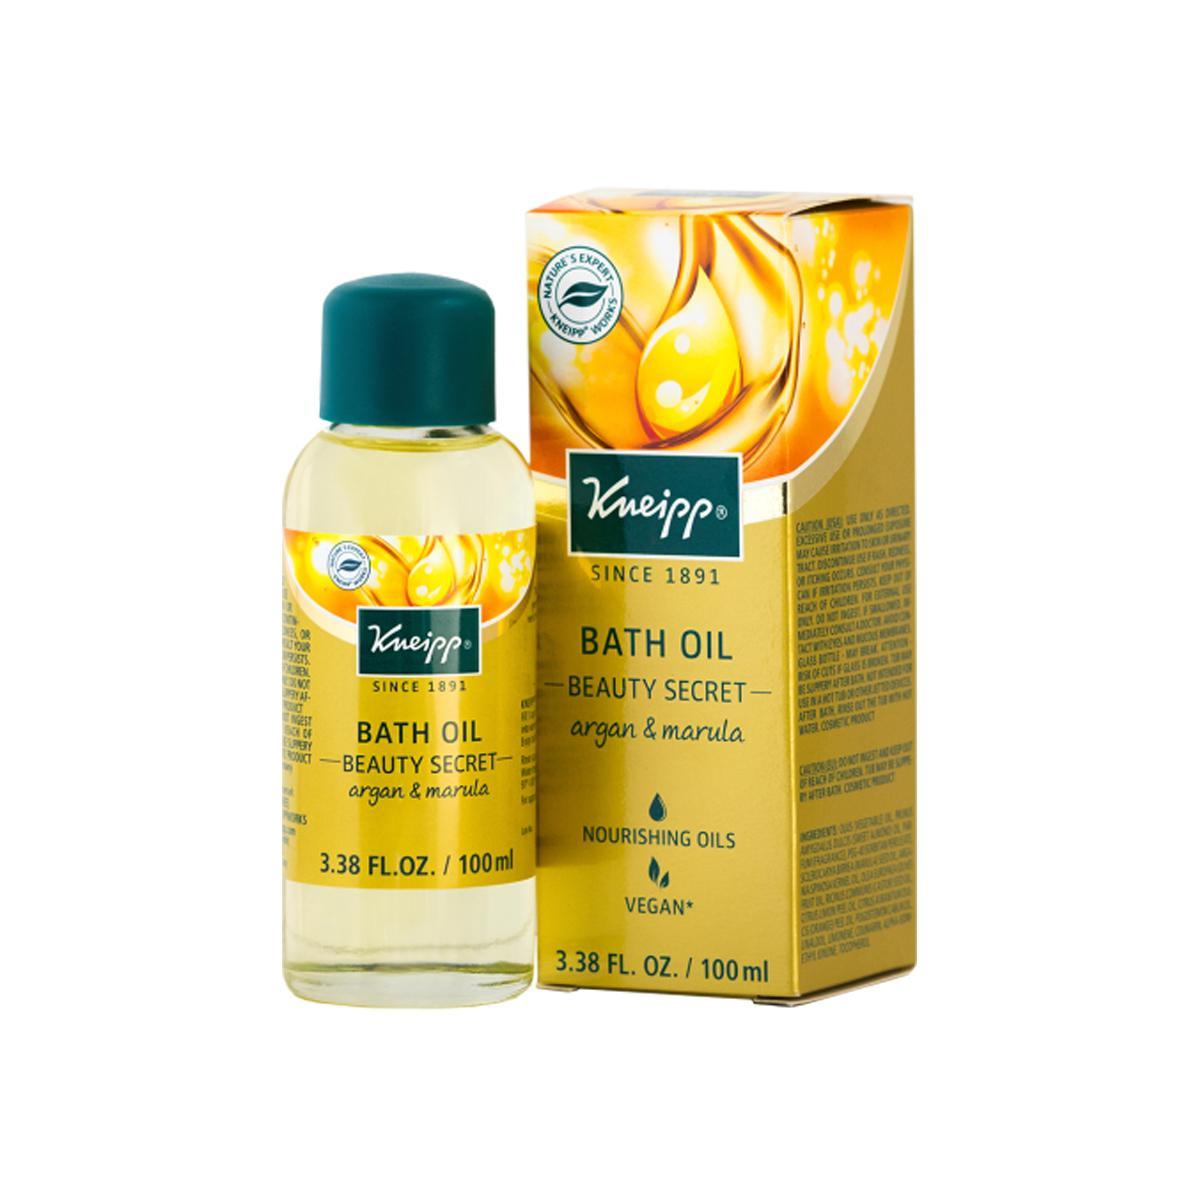 Kneipp - Bath Oil- Beauty Secret